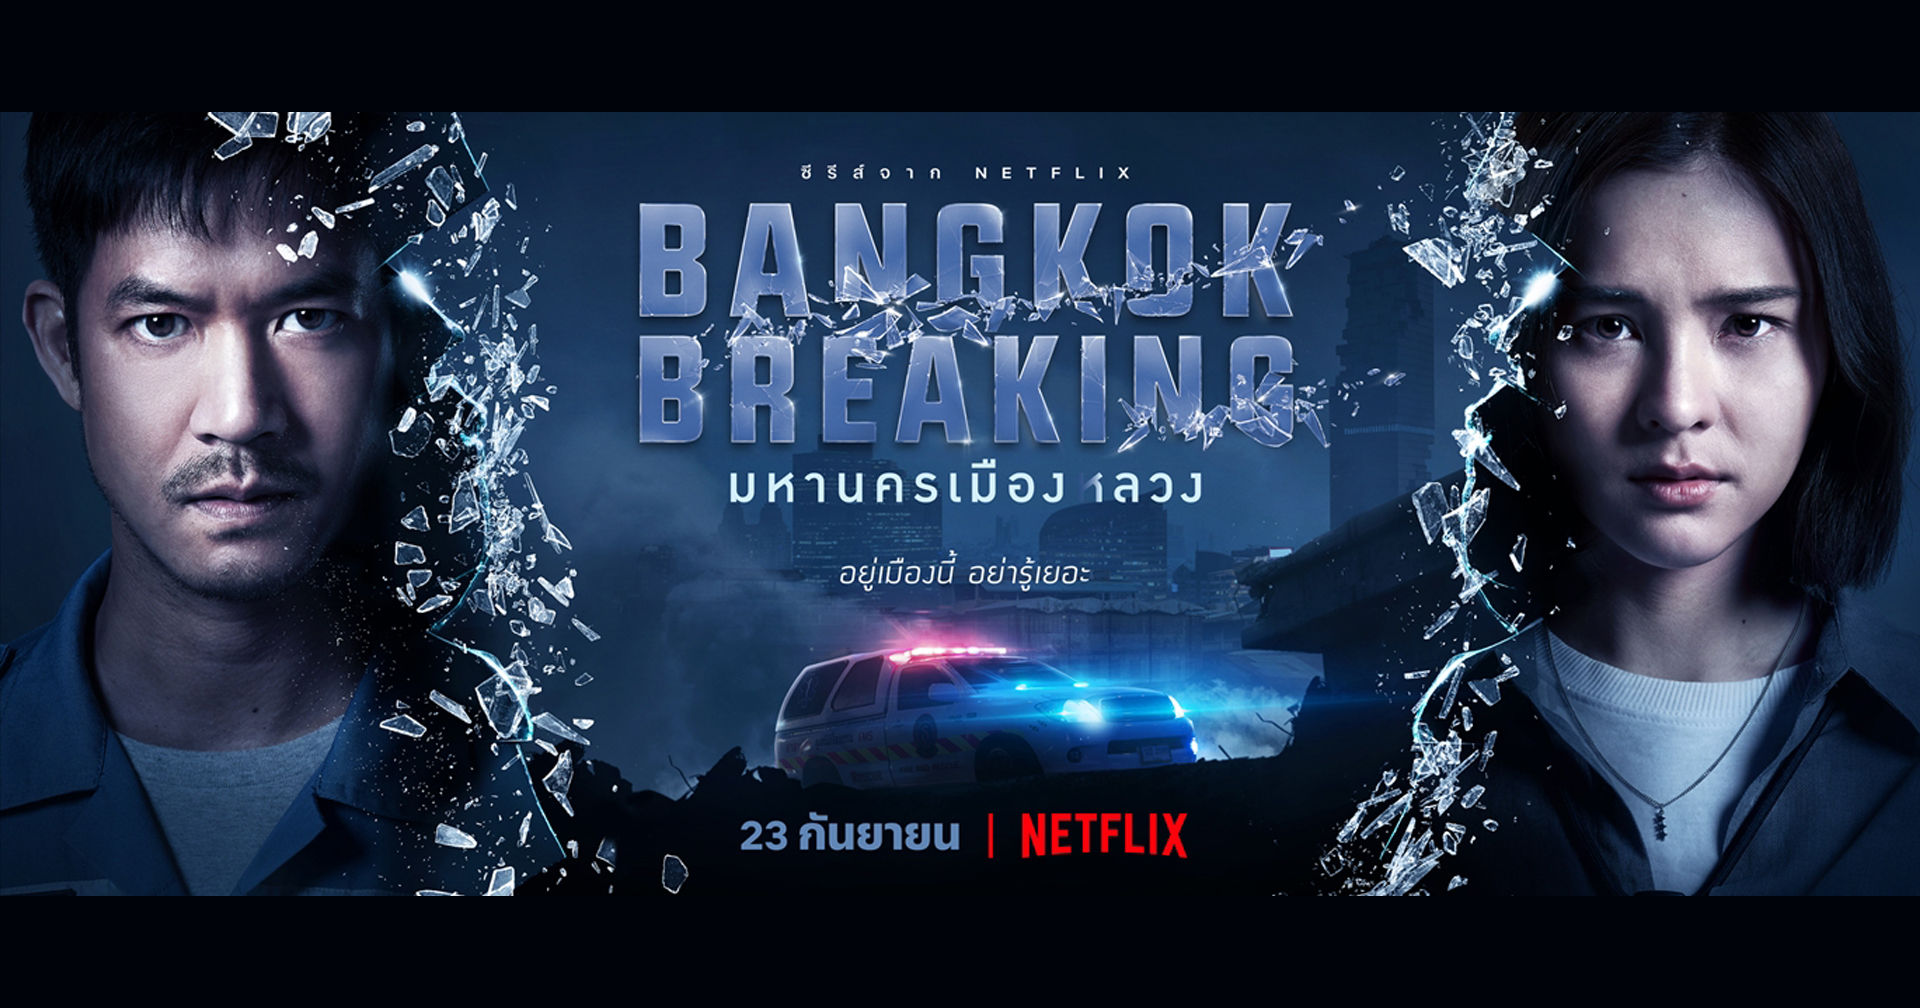 Netflix เตรียมแฉภารกิจมืดกลางกรุง กับผลงานซีรีส์ไทยเรื่องล่าสุด ‘Bangkok Breaking มหานครเมืองลวง’